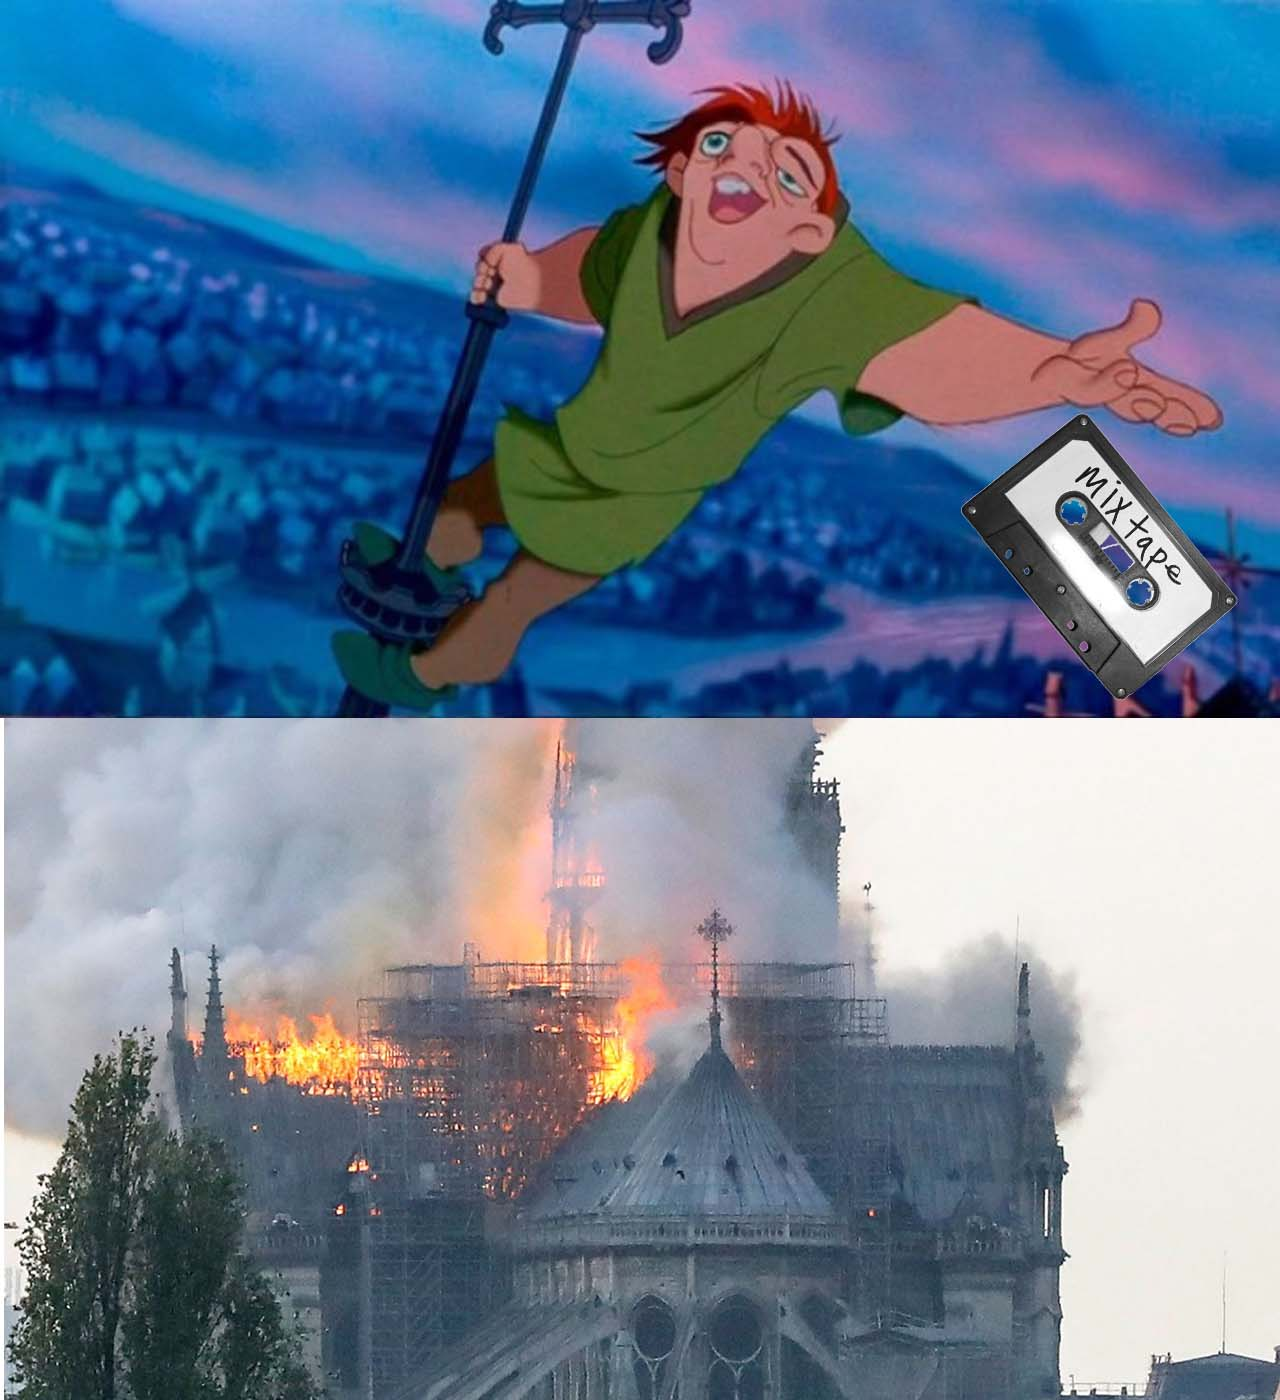 Quasimodo meme dropping his mixtape onto the Notre Dame Cathedral